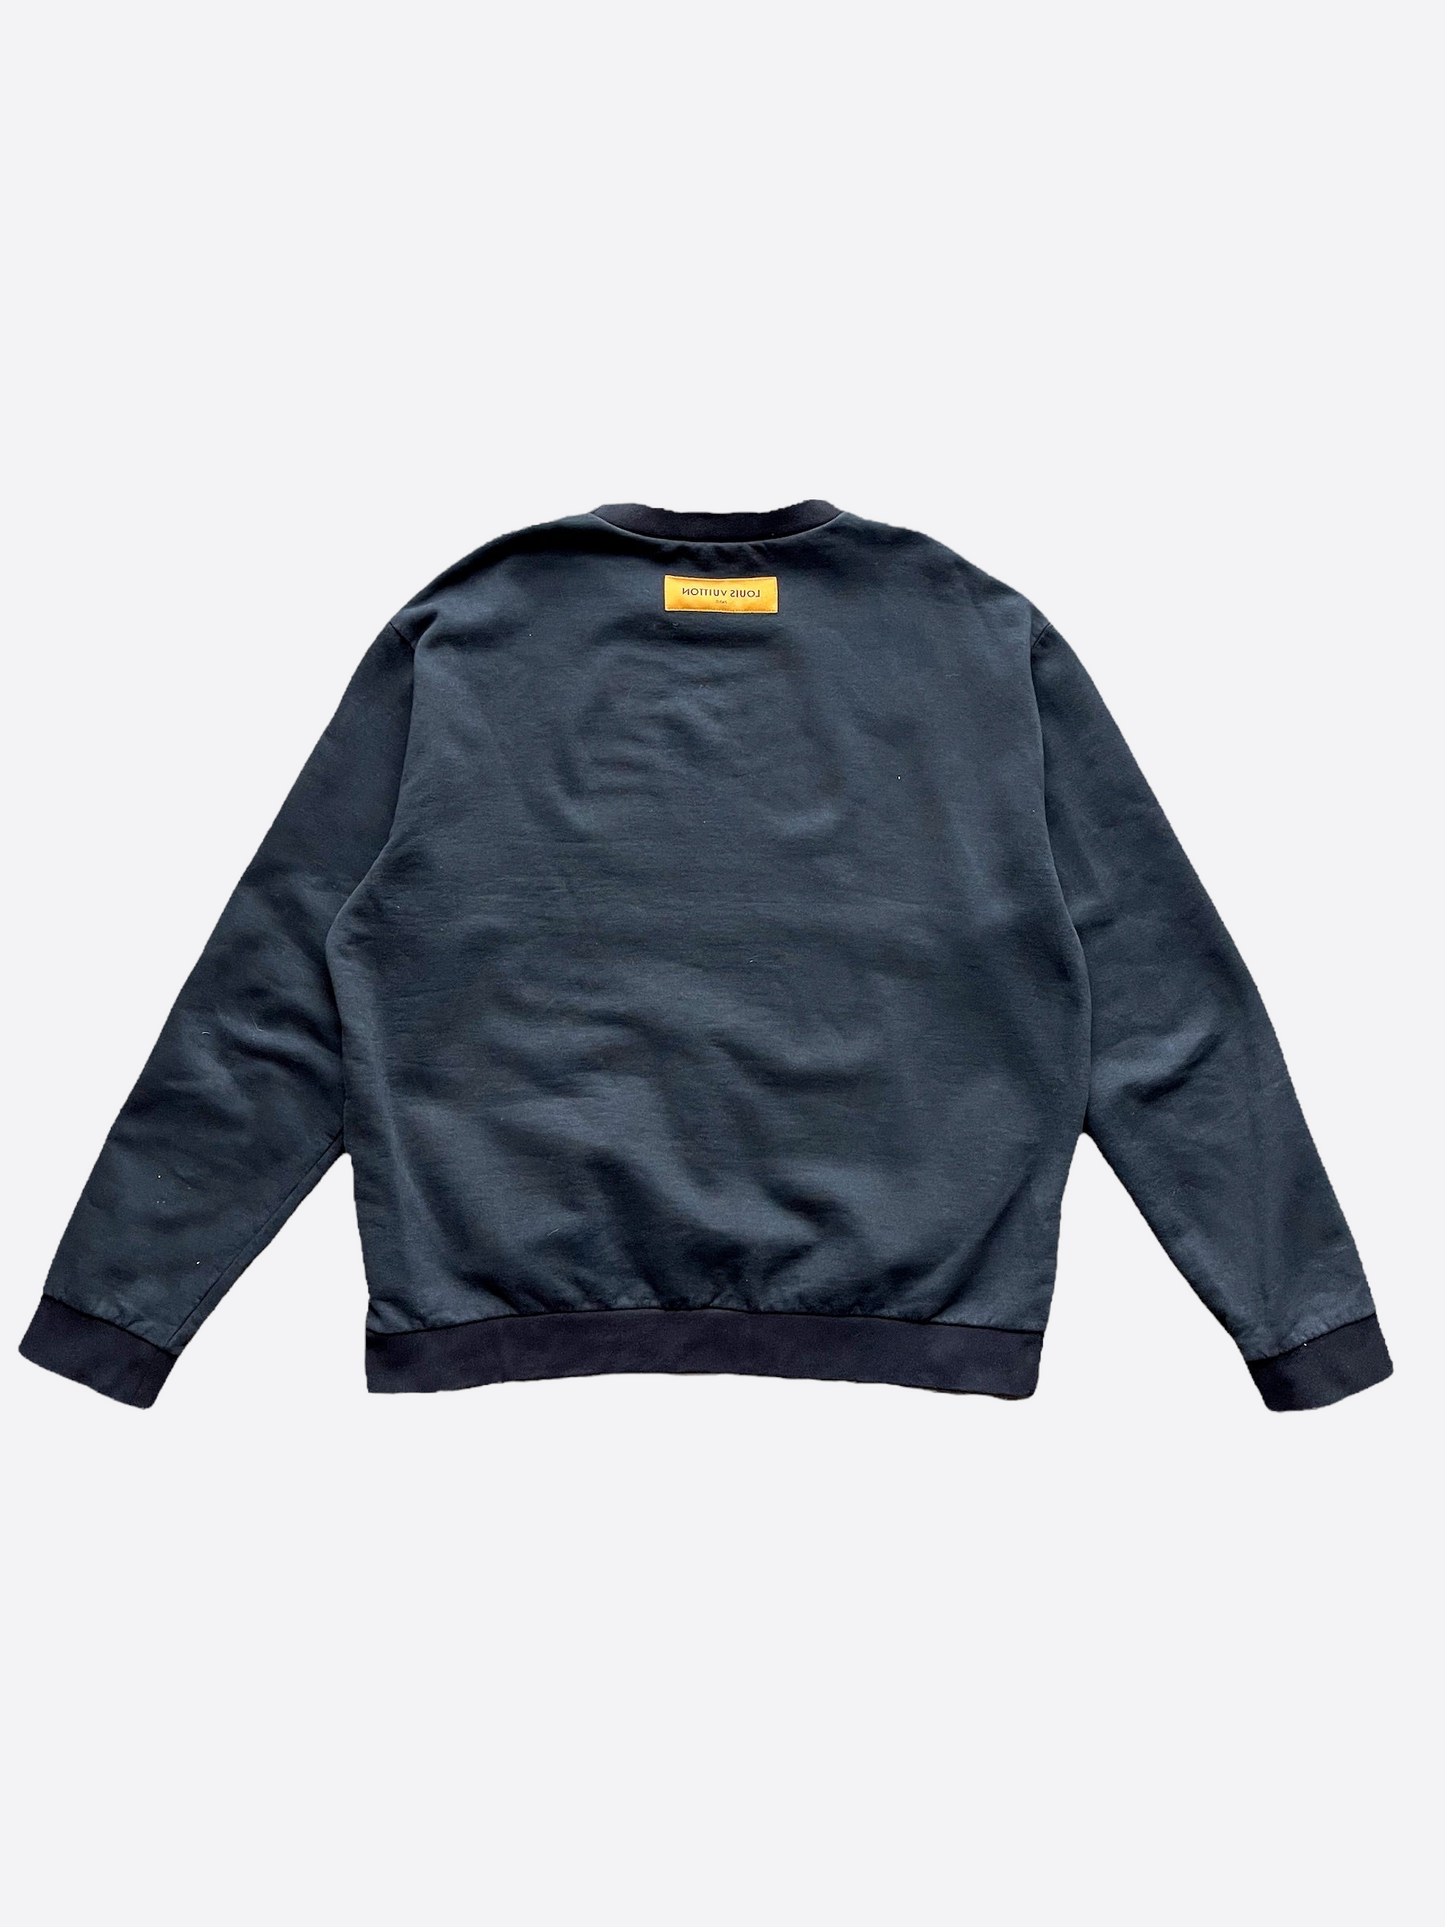 Louis Vuitton Black Knit Drop Needle Monogram Crewneck Sweatshirt